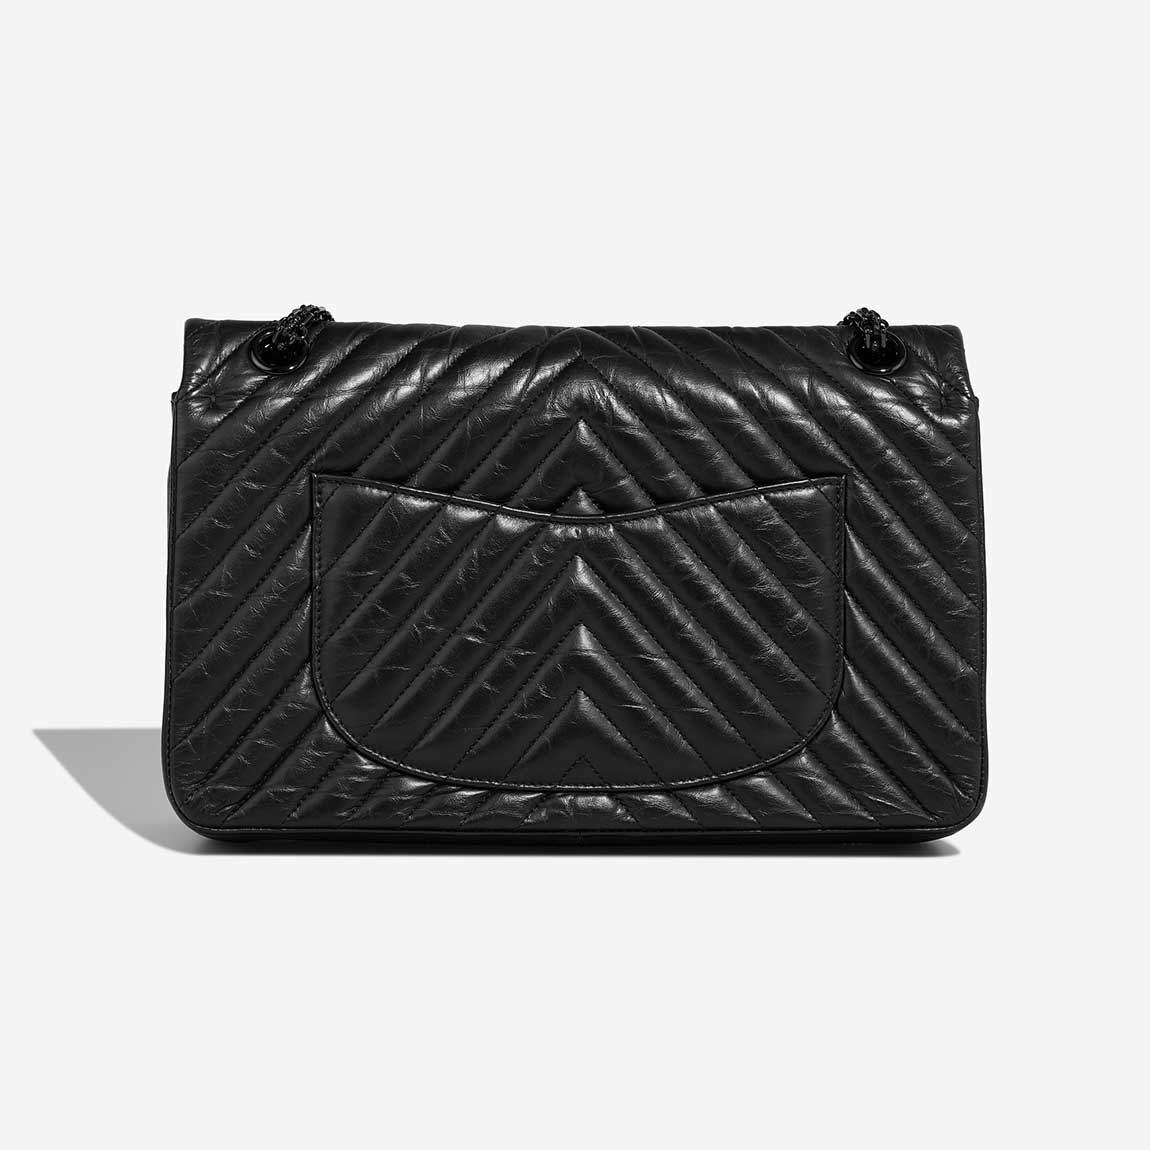 Chanel 2.55 Reissue 226 Aged Calf Black | Sell your designer bag